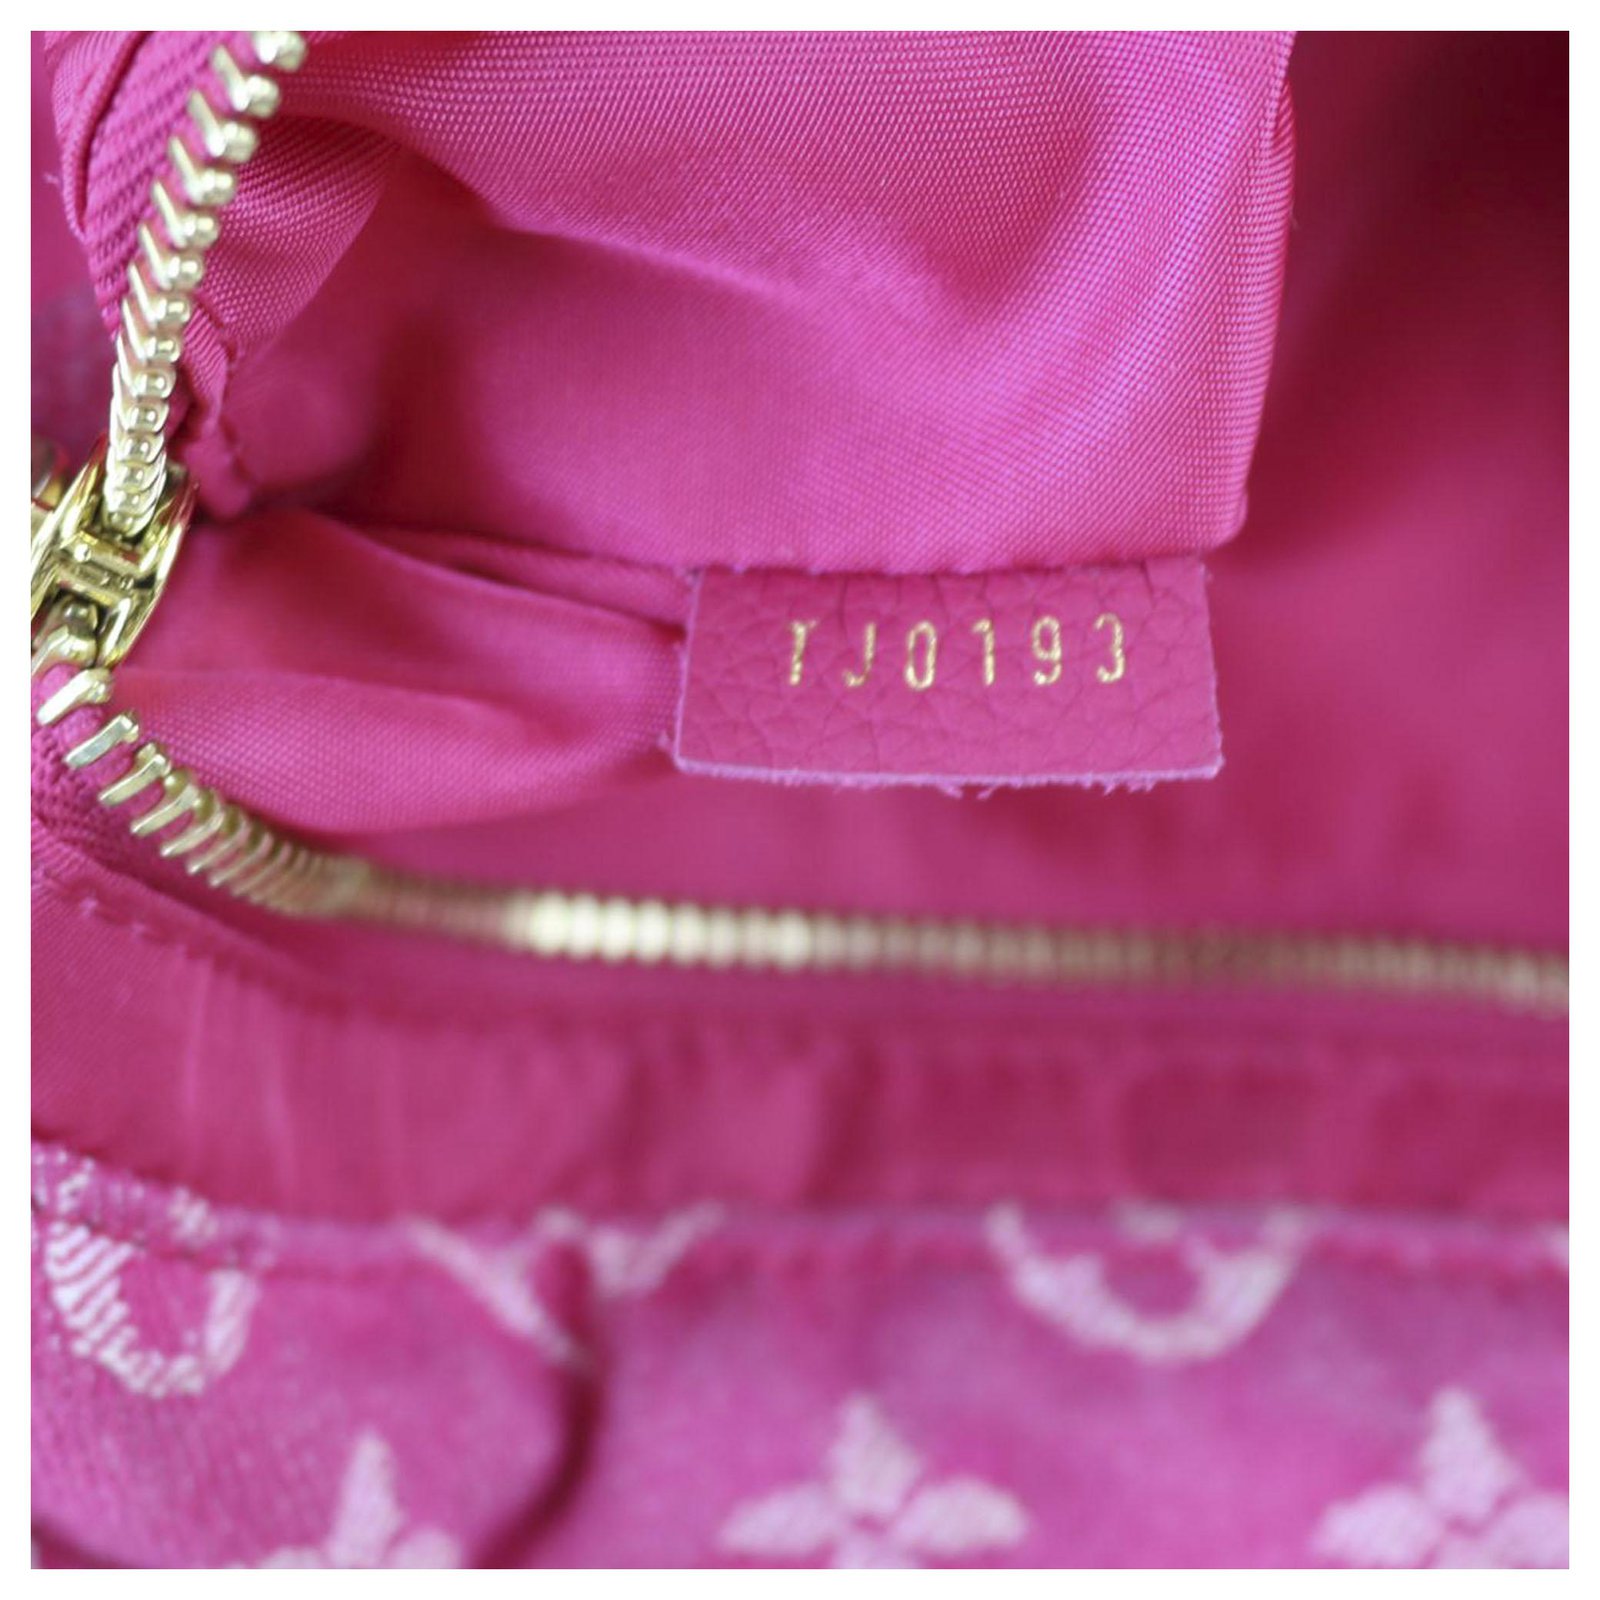 Louis Vuitton Pink Monogram Denim Noefull MM Leather Pony-style